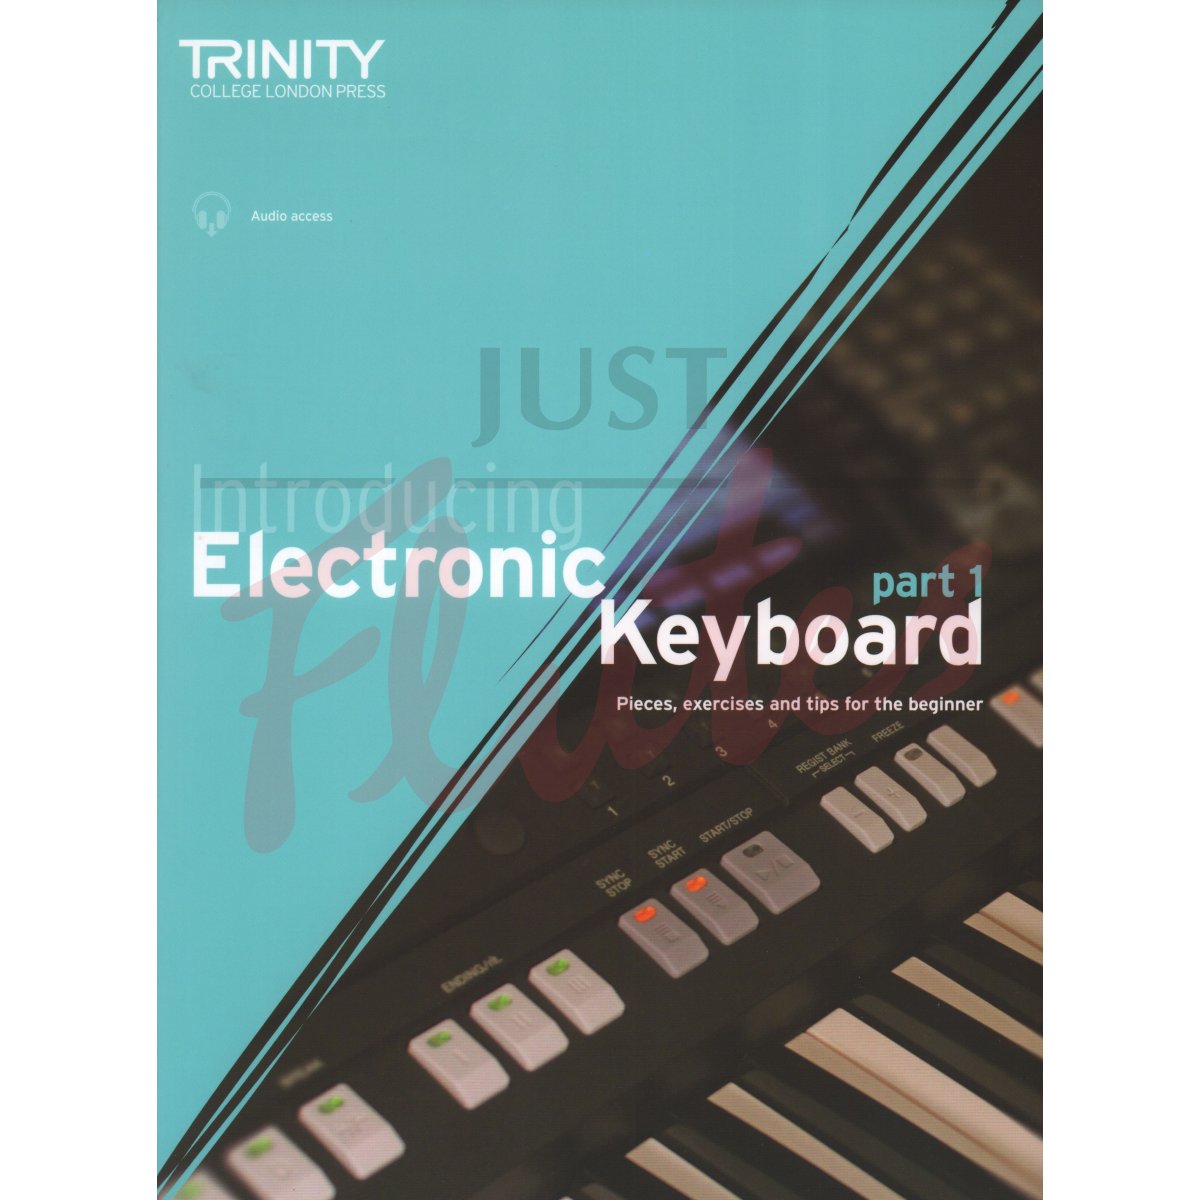 Introducing Electronic Keyboard - Part 1